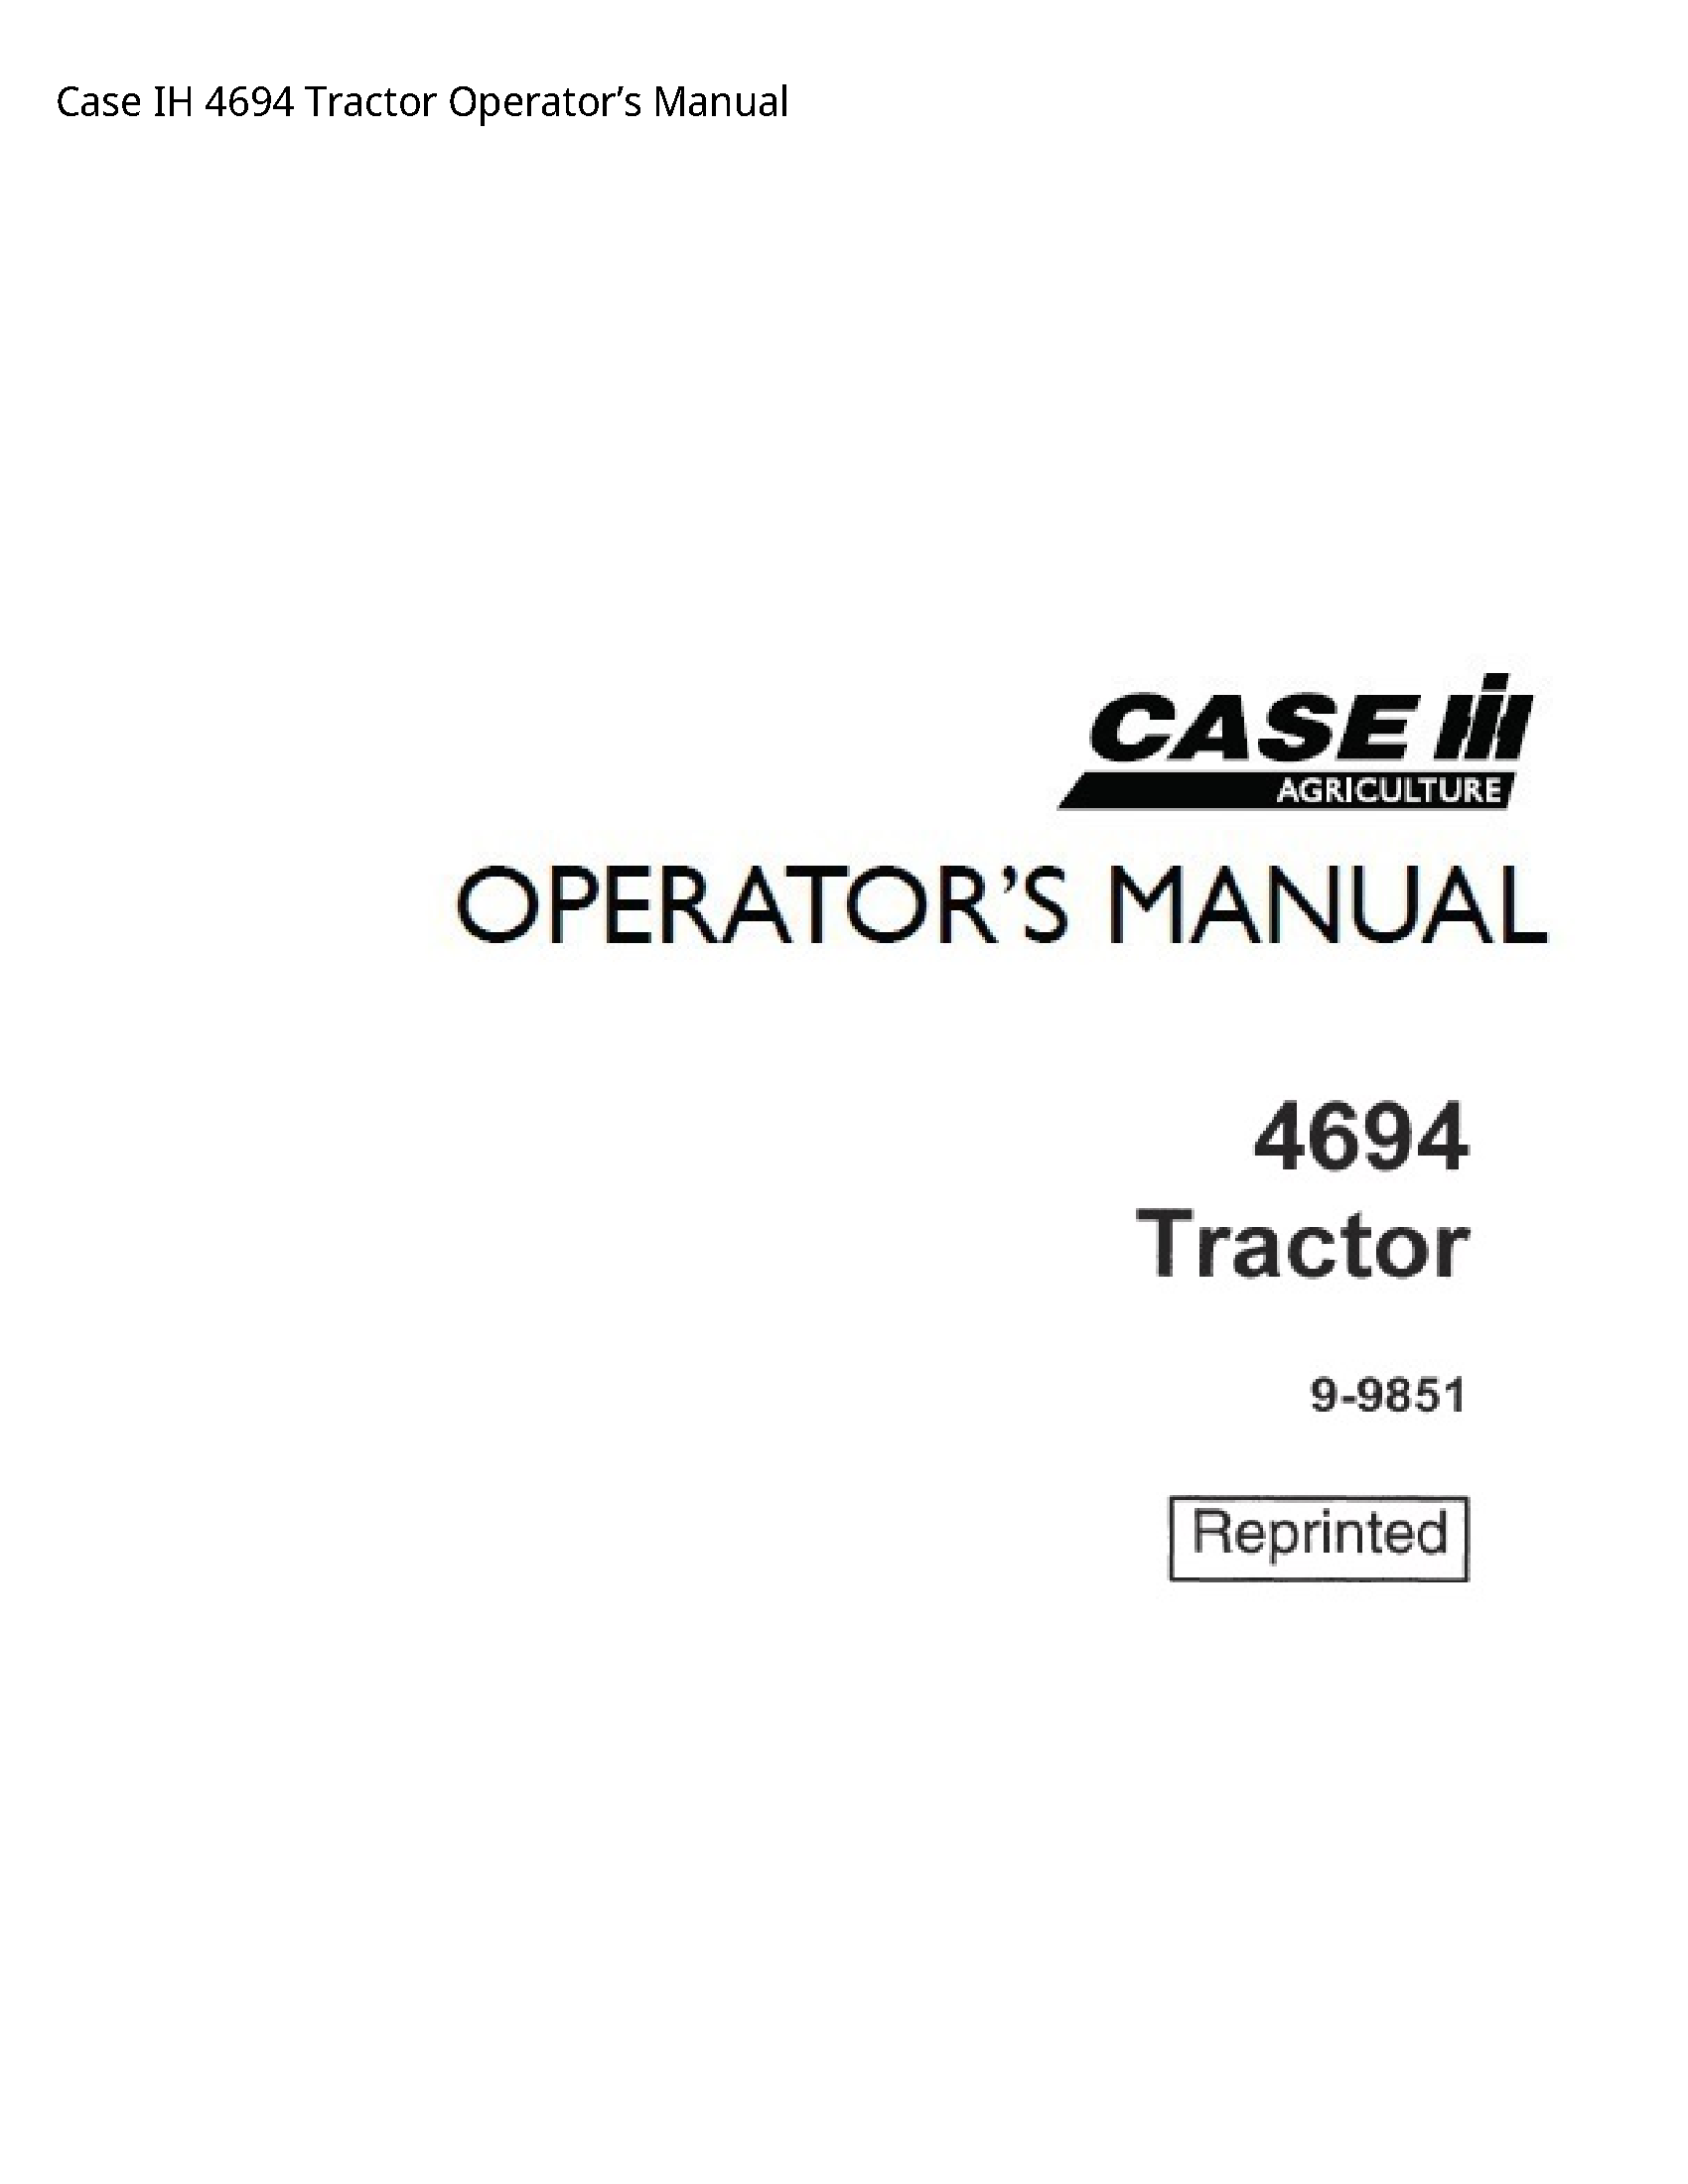 Case/Case IH 4694 IH Tractor Operator’s manual